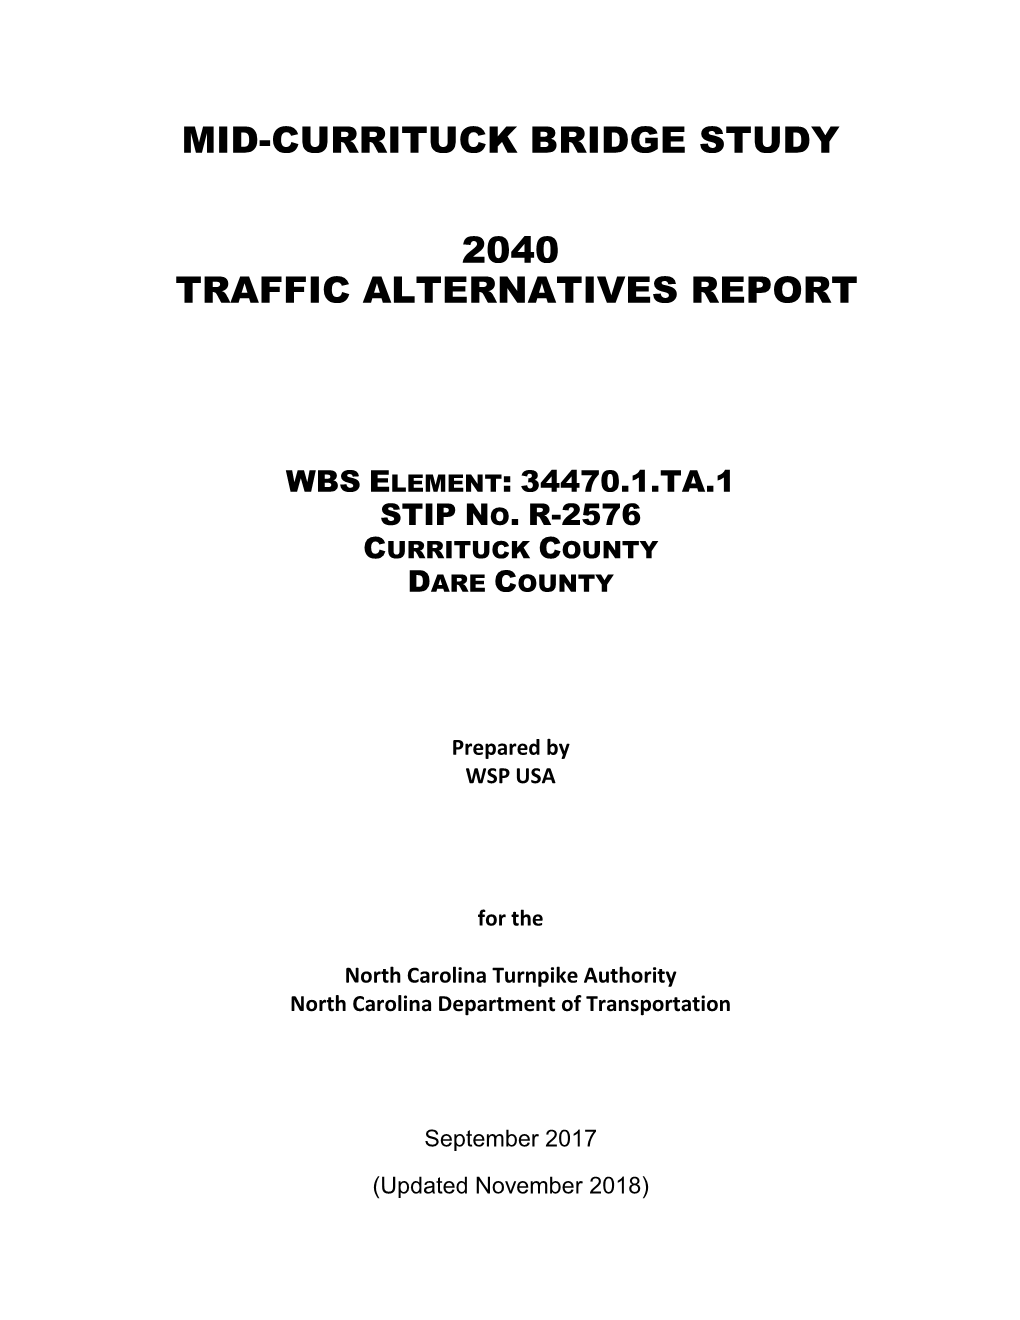 Mid-Currituck Bridge 2040 Traffic Alternatives Report